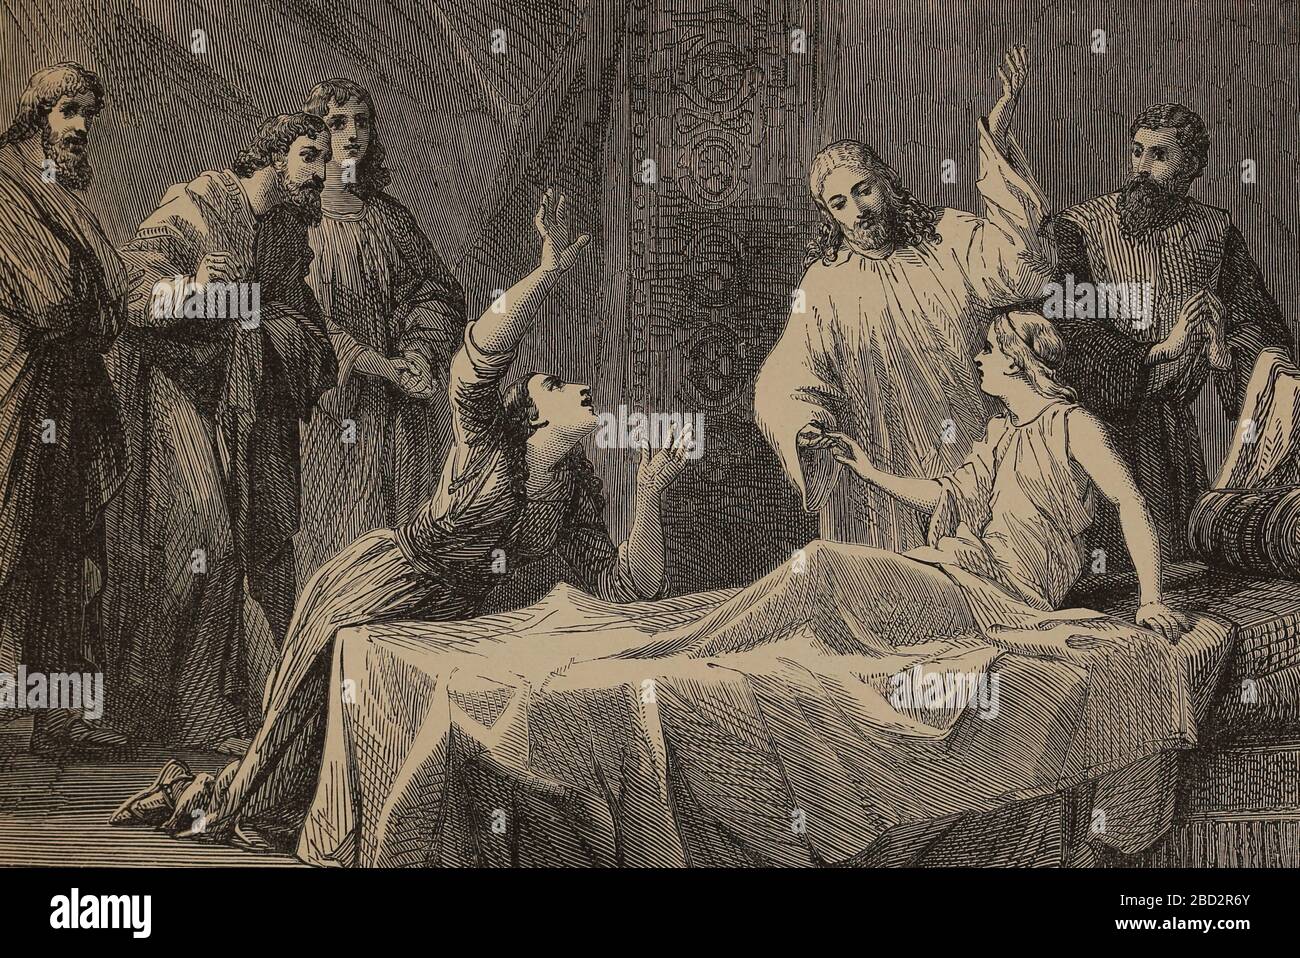 Raising of Jairu's Daughter. Miracle of Jesus in the Gospels Mark, Mattheu and Luke. Engraving, 19th century. Stock Photo